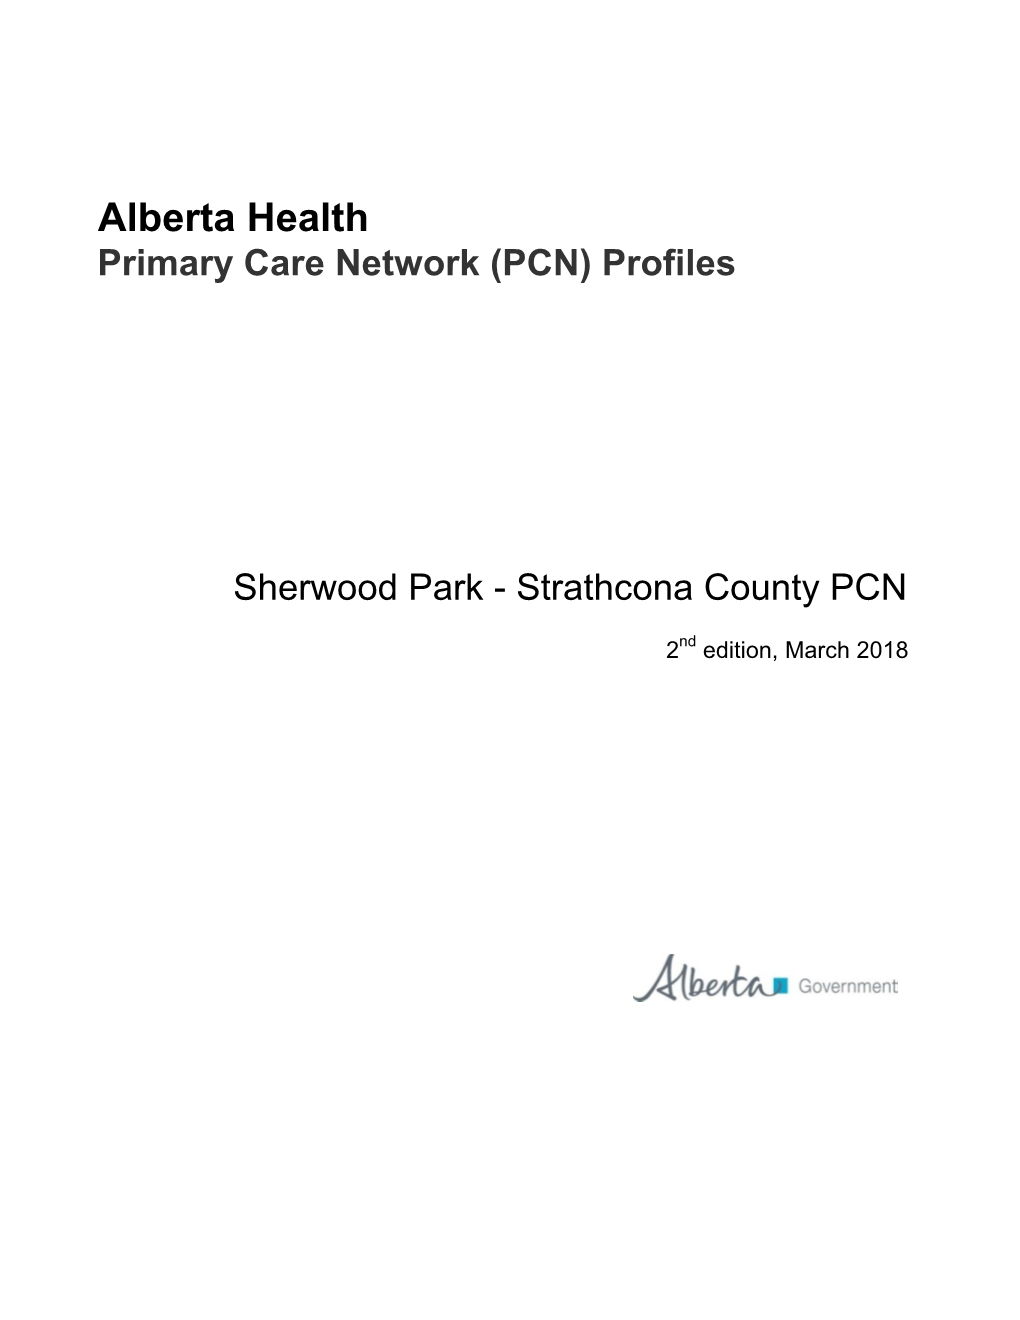 Sherwood Park - Strathcona County PCN